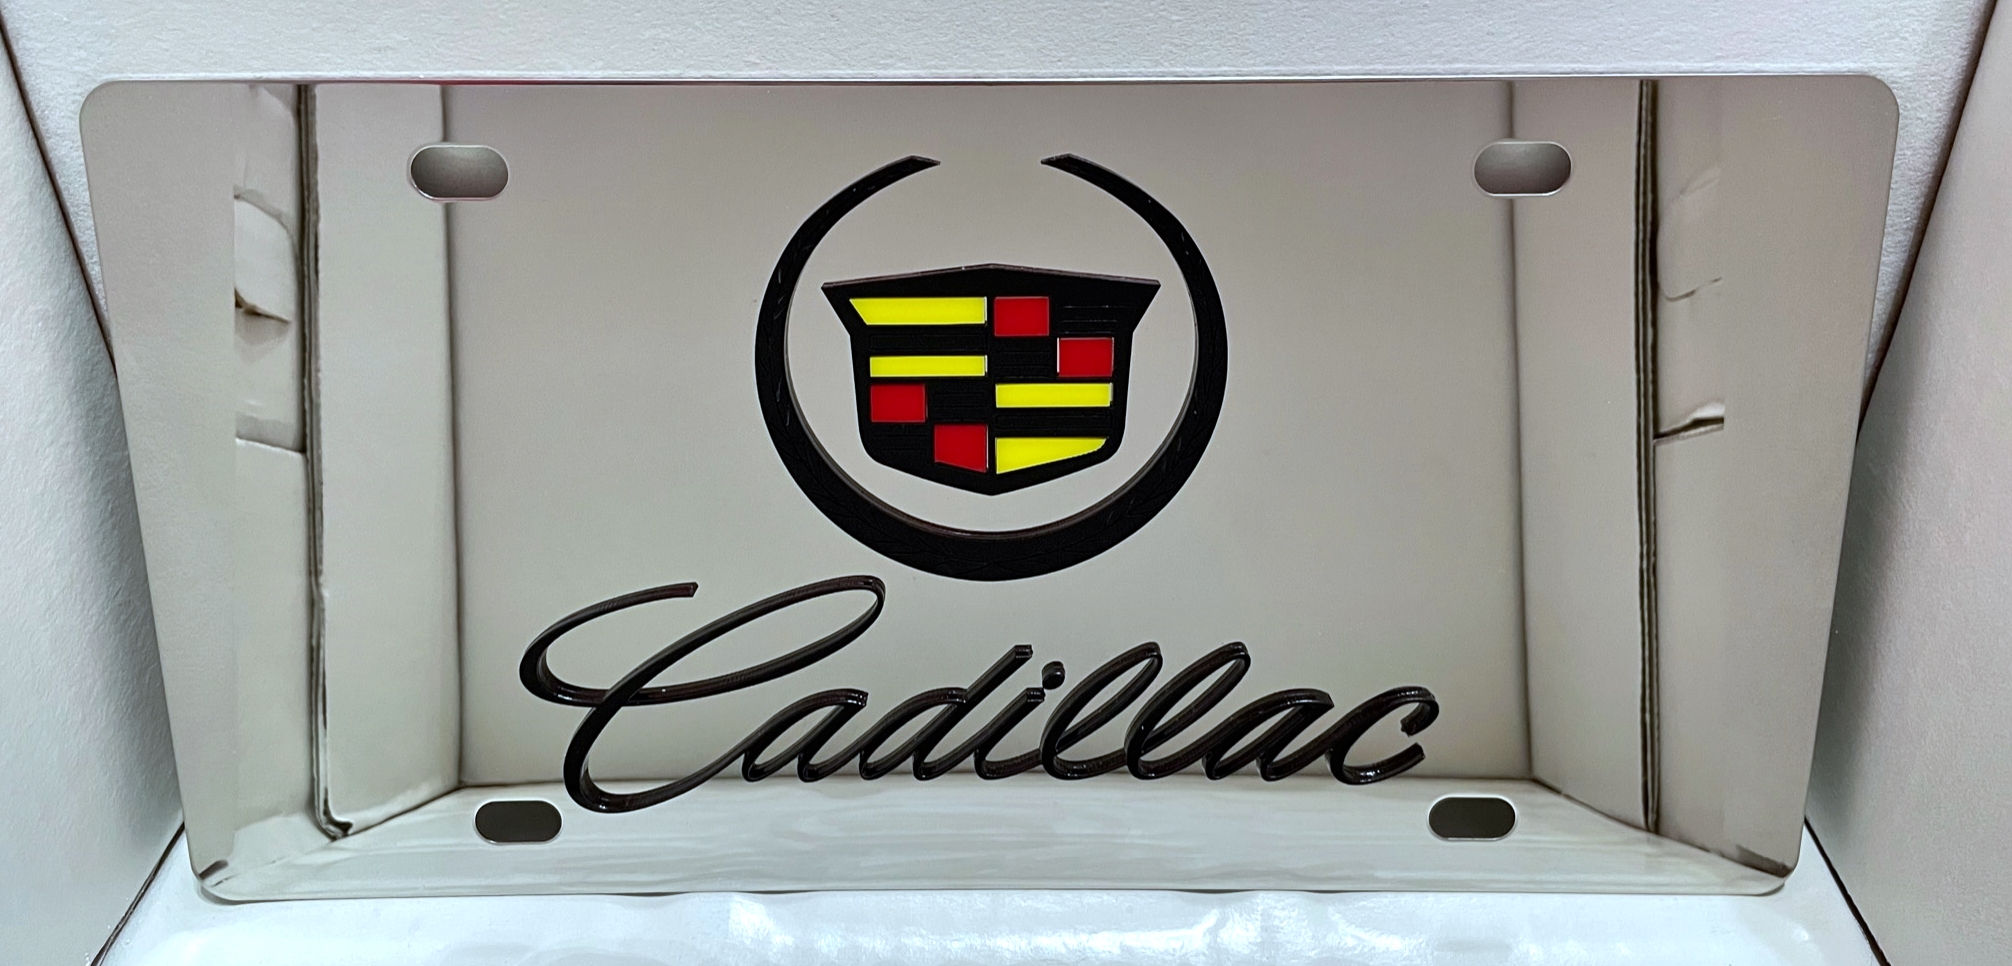 Cadillac script and emblem vanity license plate